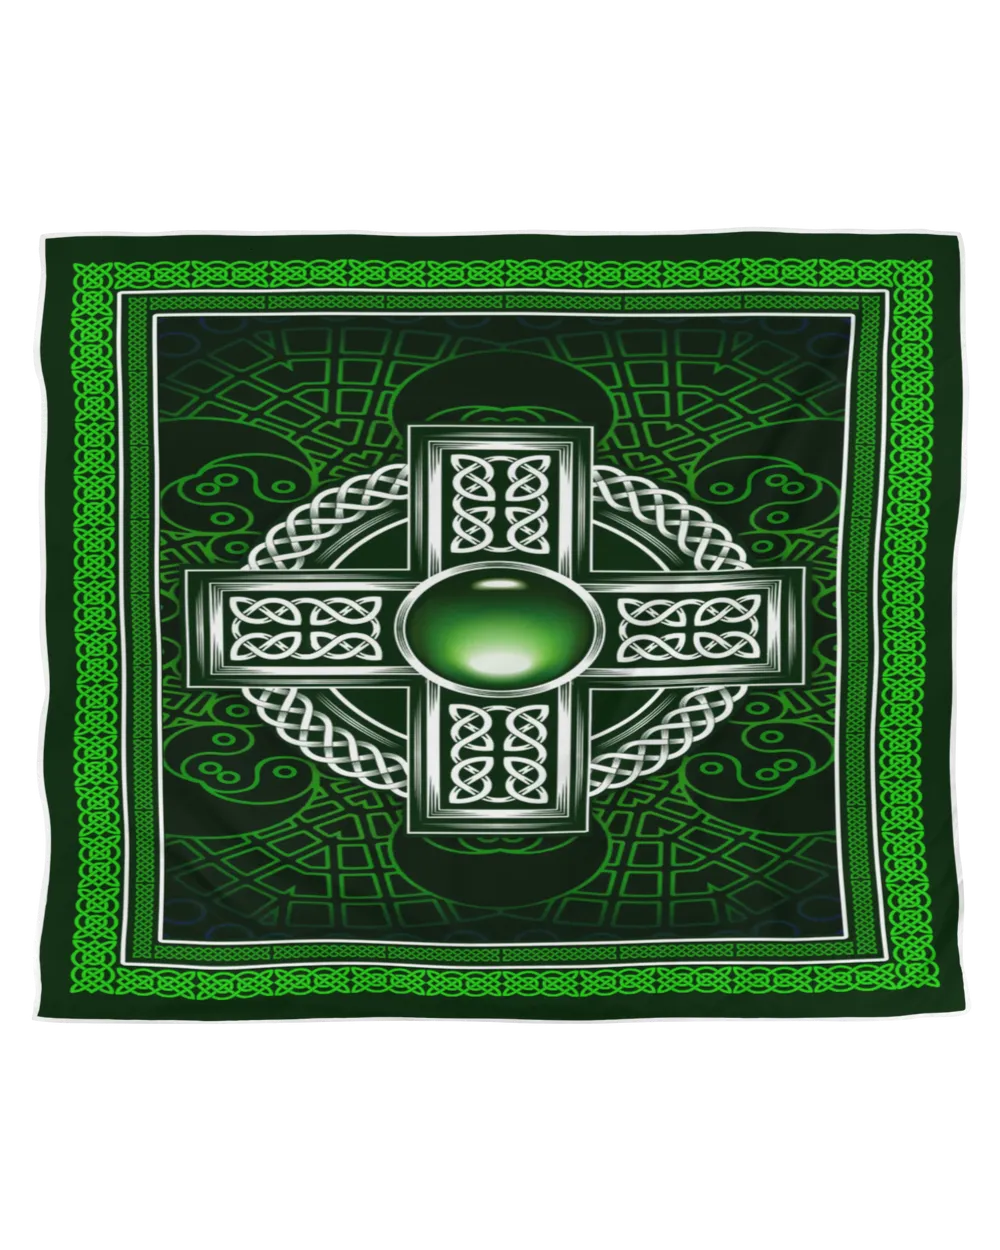 Irish Cross Celtic